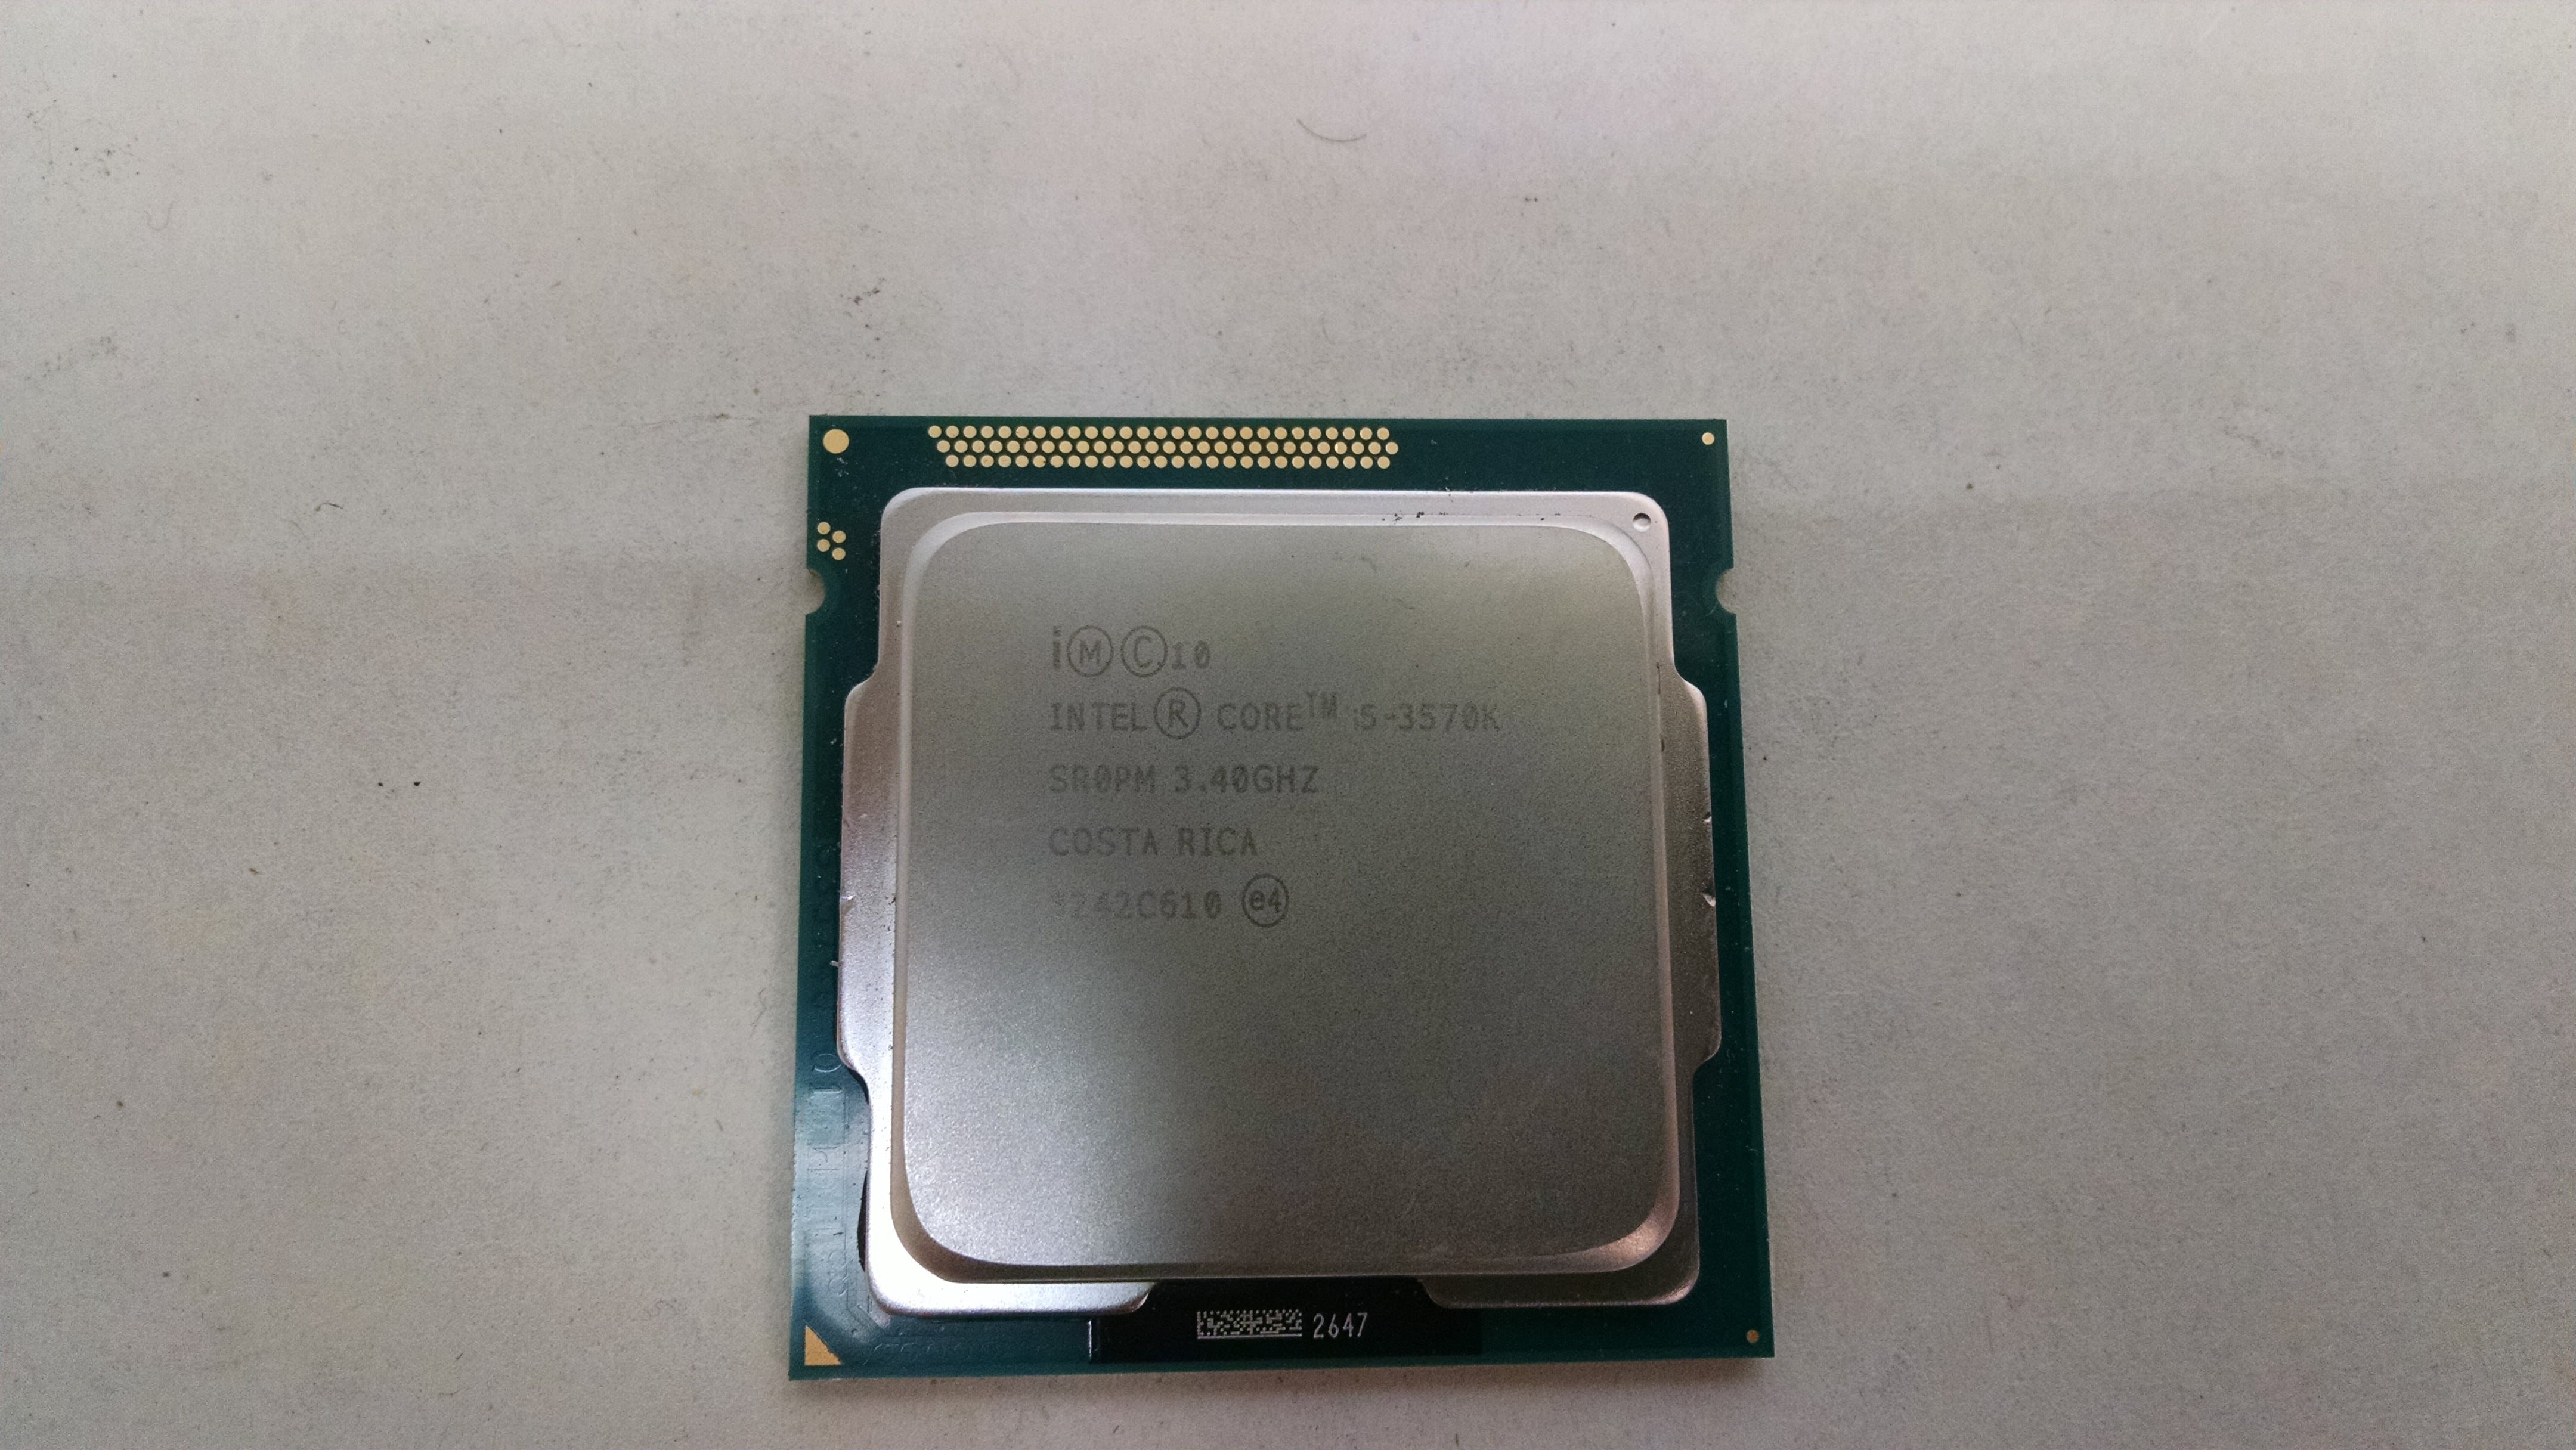 Интел 3570. Intel i5 3570k. Процессор Intel Core i5-3570k. Intel Core i5-3570k (3.4 ГГЦ). 3570 Сокет.